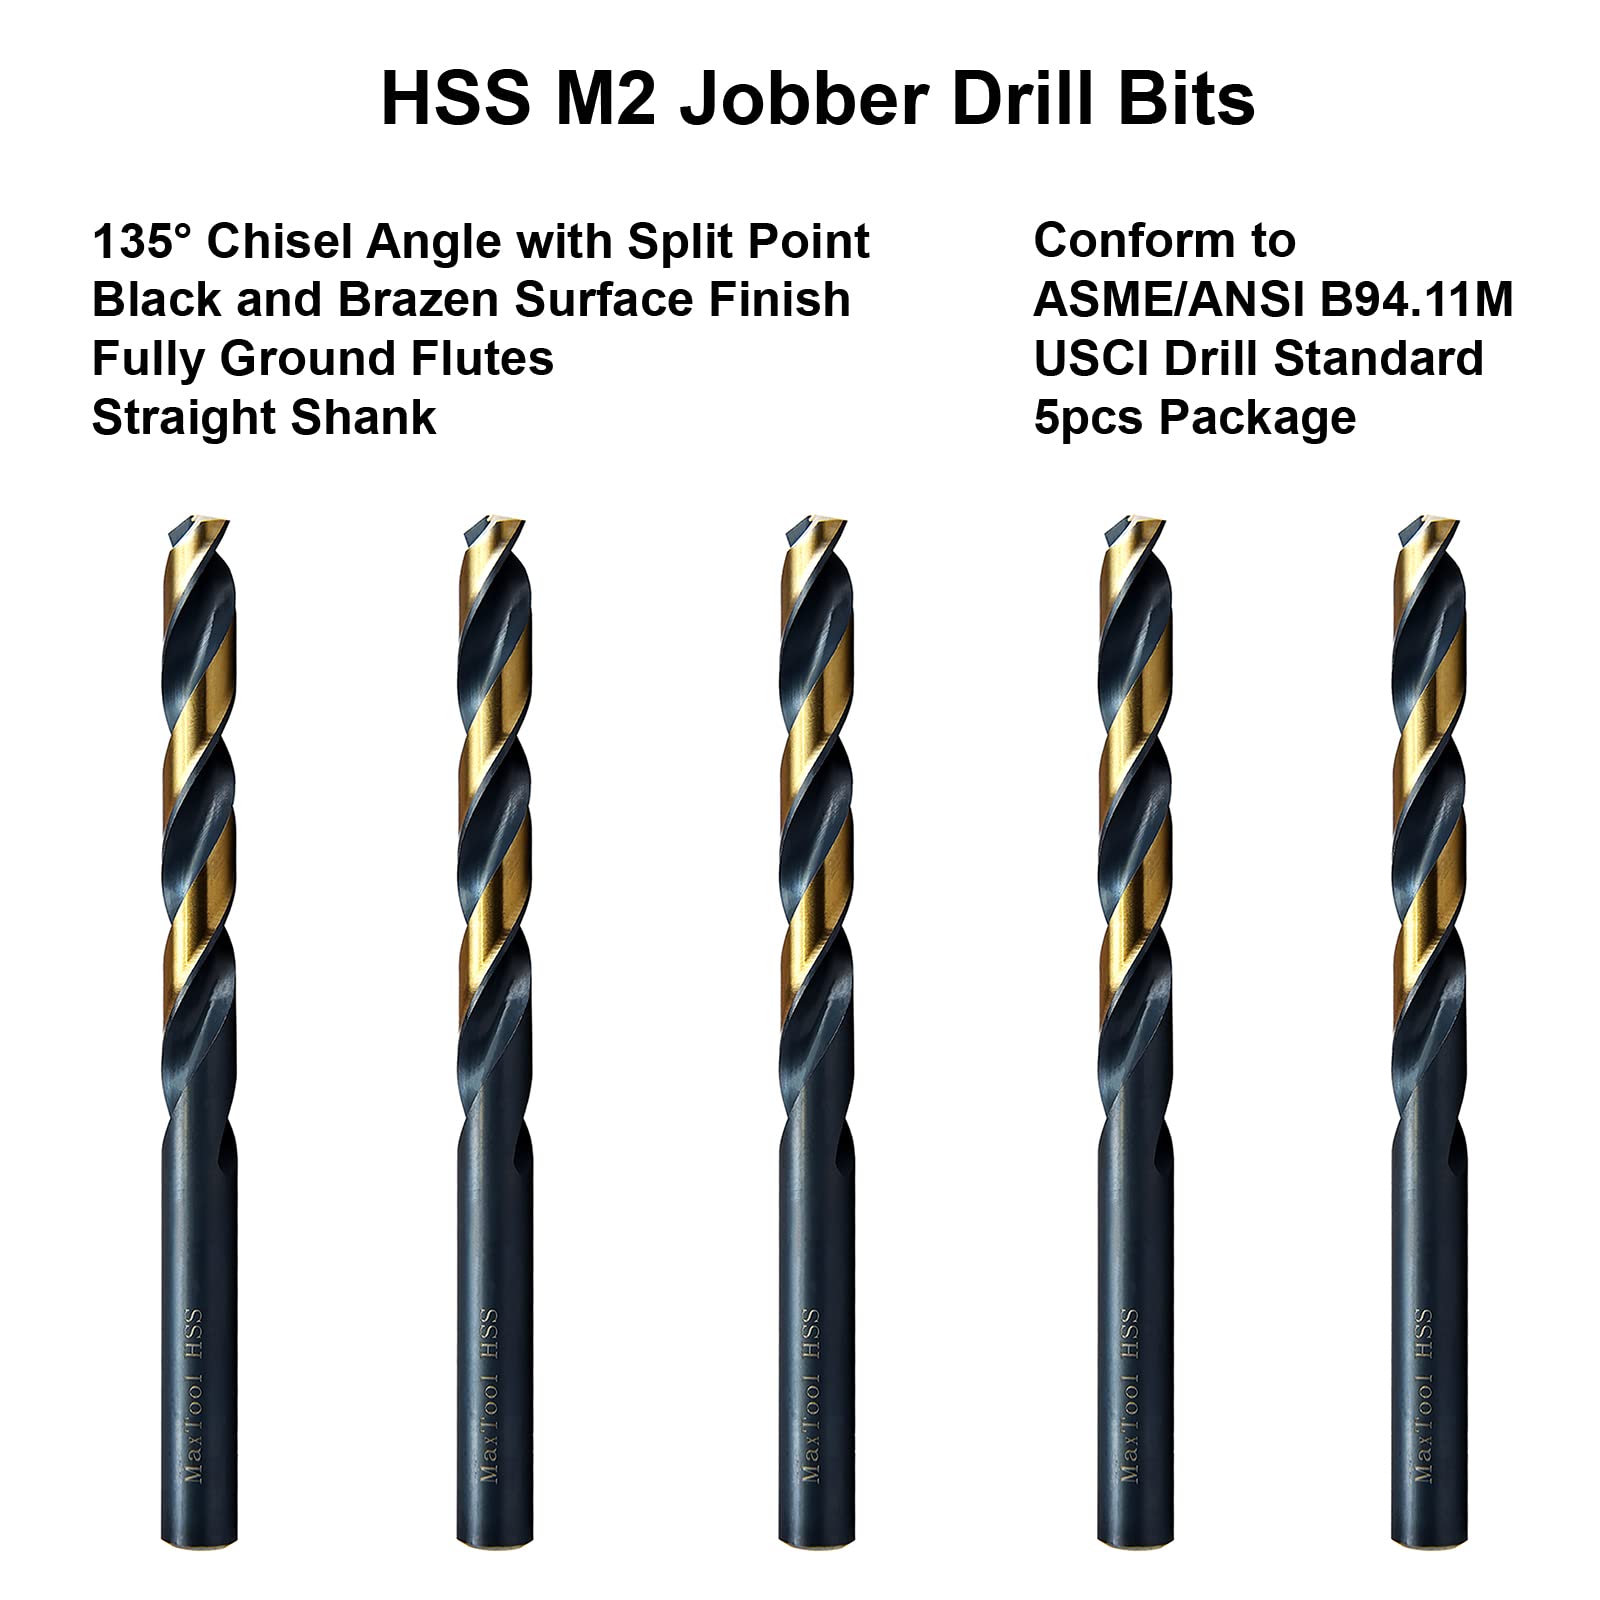 MAXTOOL 6.8mm 5pcs Identical Jobber Length Drills HSS M2 Twist Drill Bits Metric Fully Ground Black & Bronze Straight Shank Drills; JBM02H10R068P5